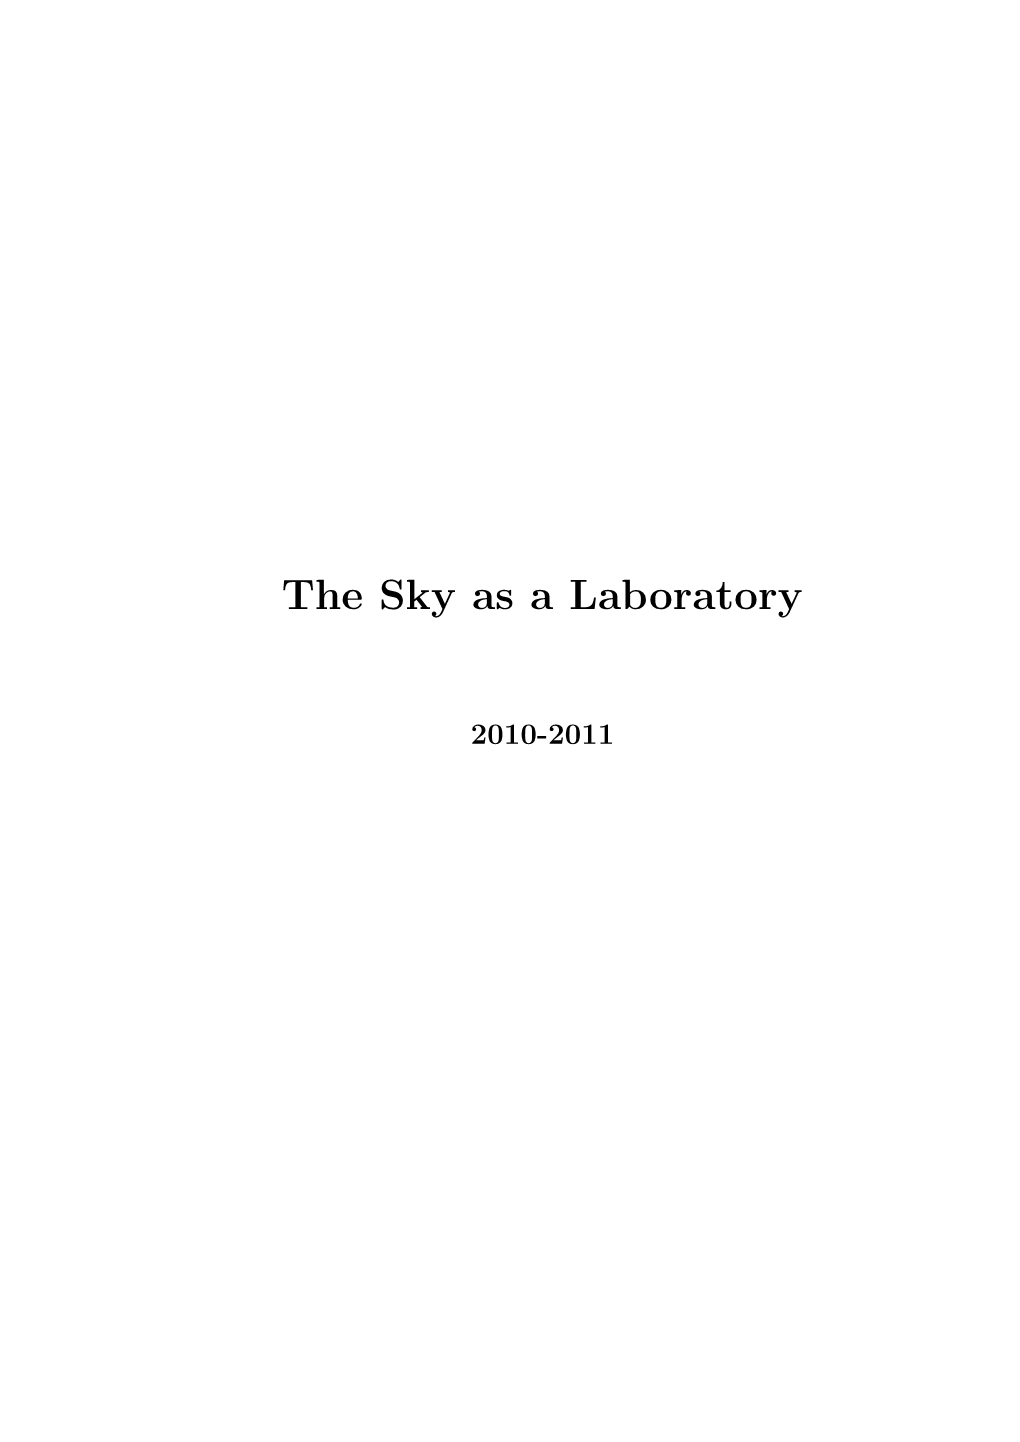 The Sky As a Laboratory